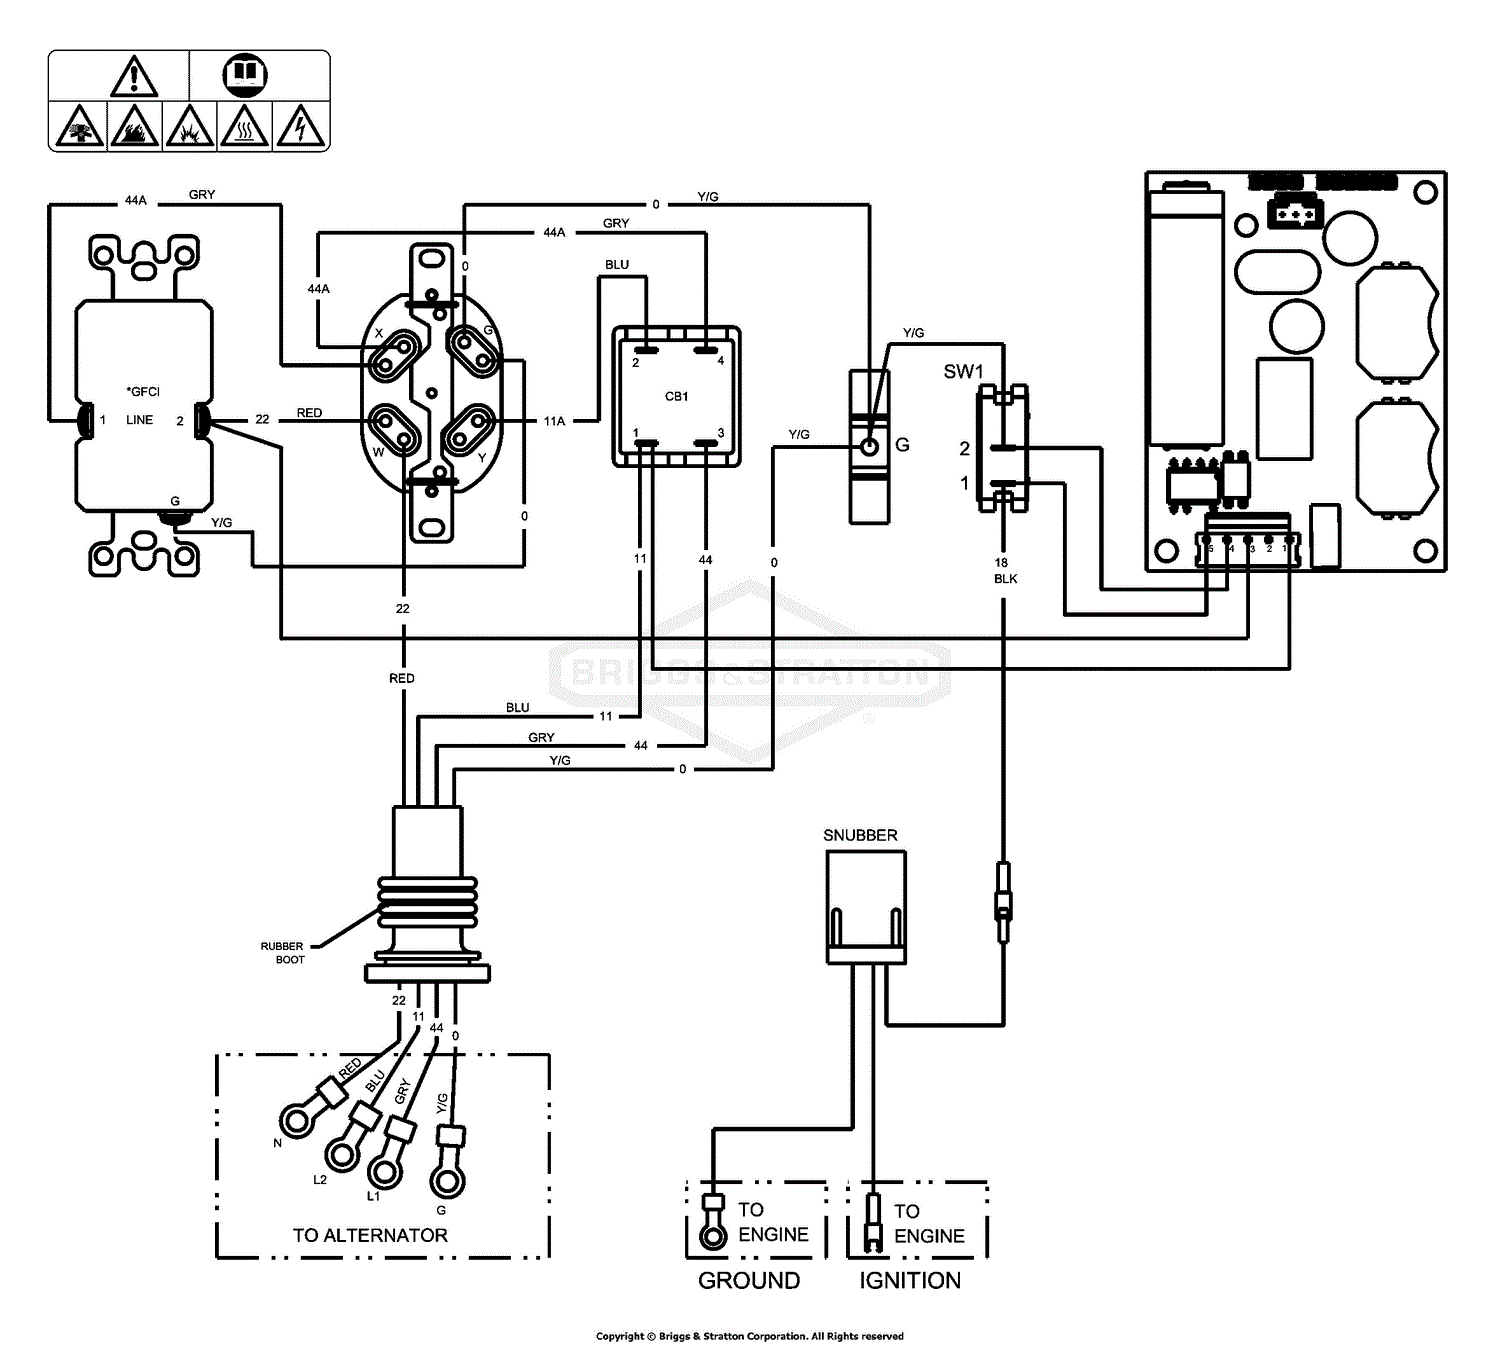 parinah-3-briggs-and-stratton-8-hp-wiring-diagram-24-hp-briggs-and-stratton-engine-wire